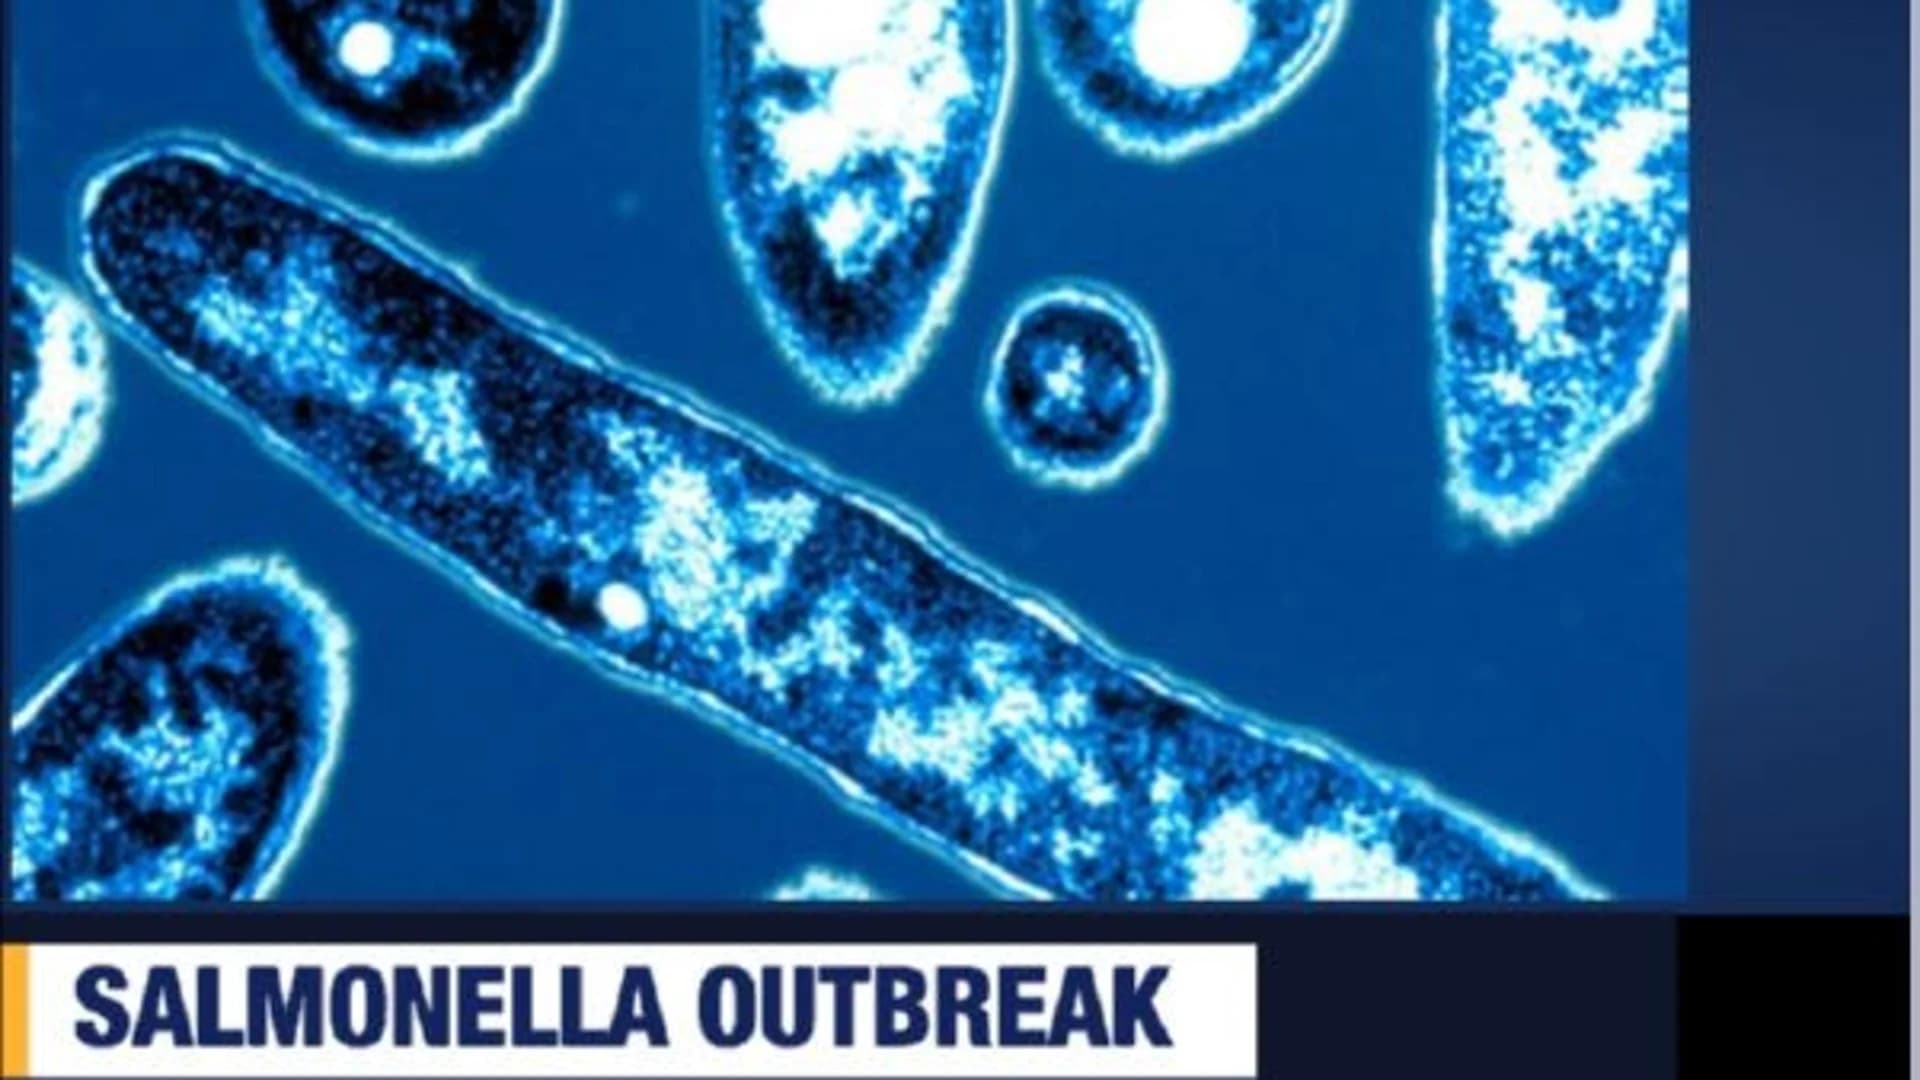 FDA: Salmonella outbreak linked to North Brunswick business